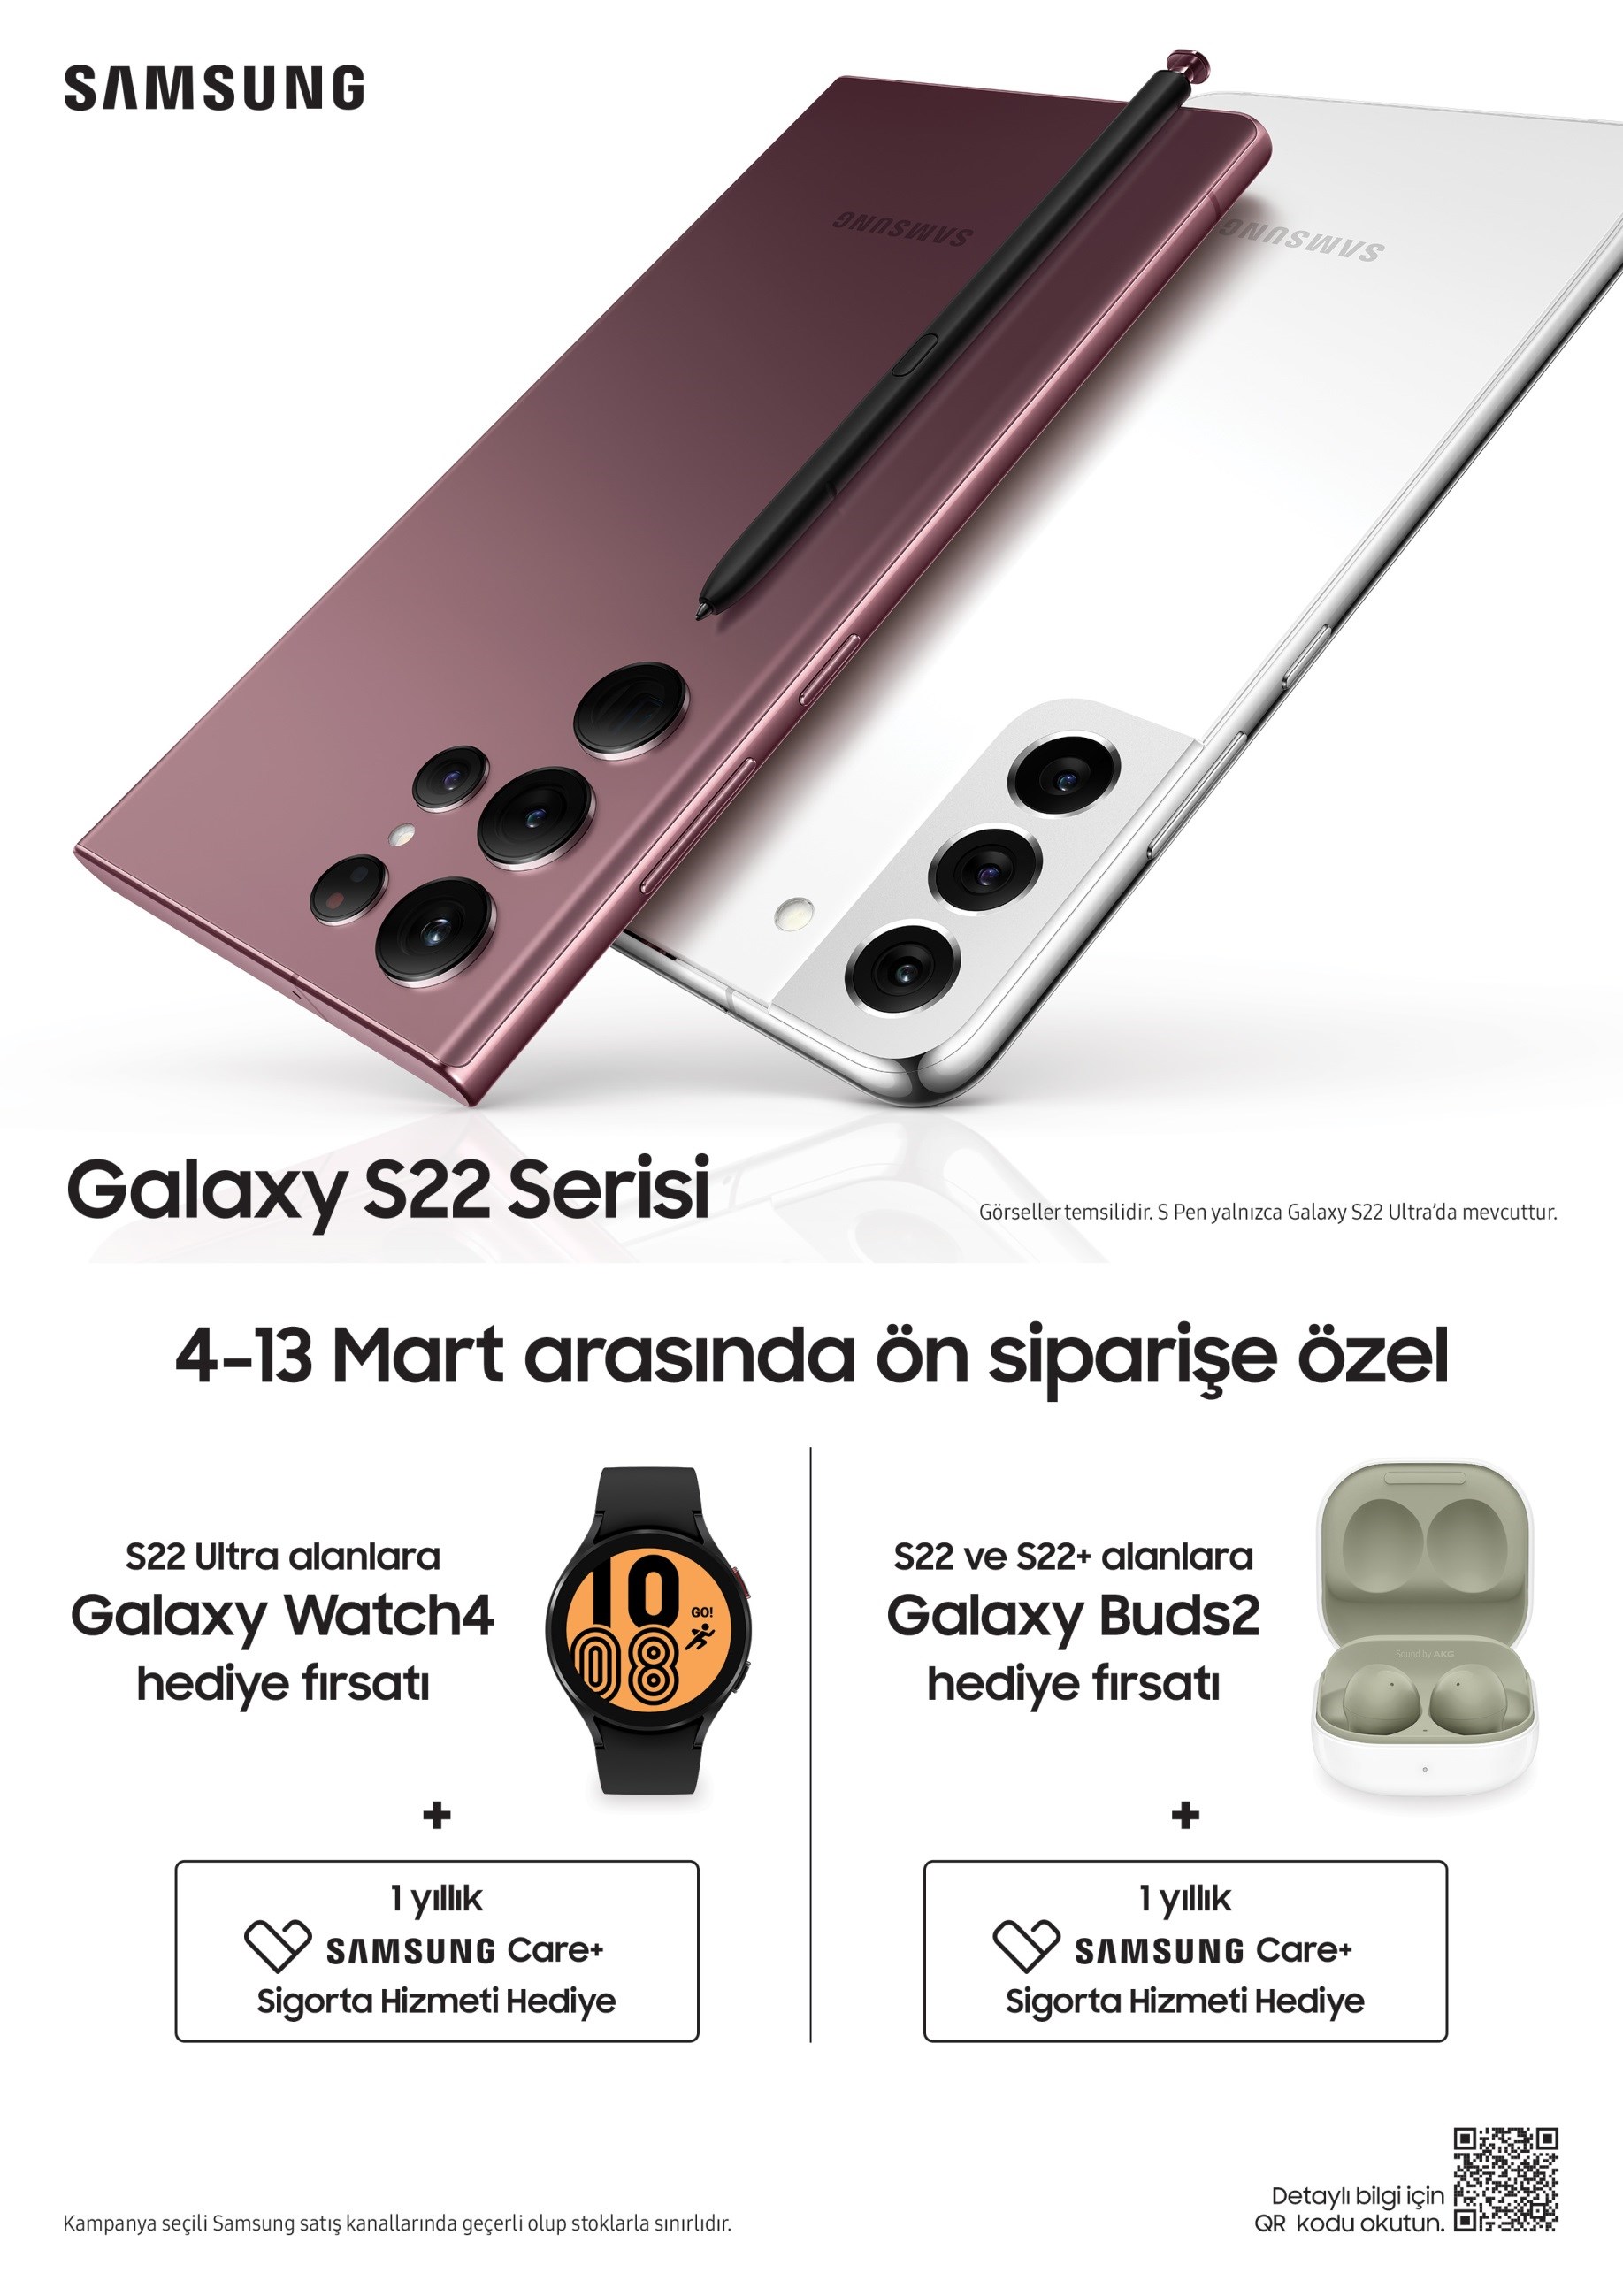 Samsung Galaxy S22 serisinin ön satış dönemine yoğun ilgi